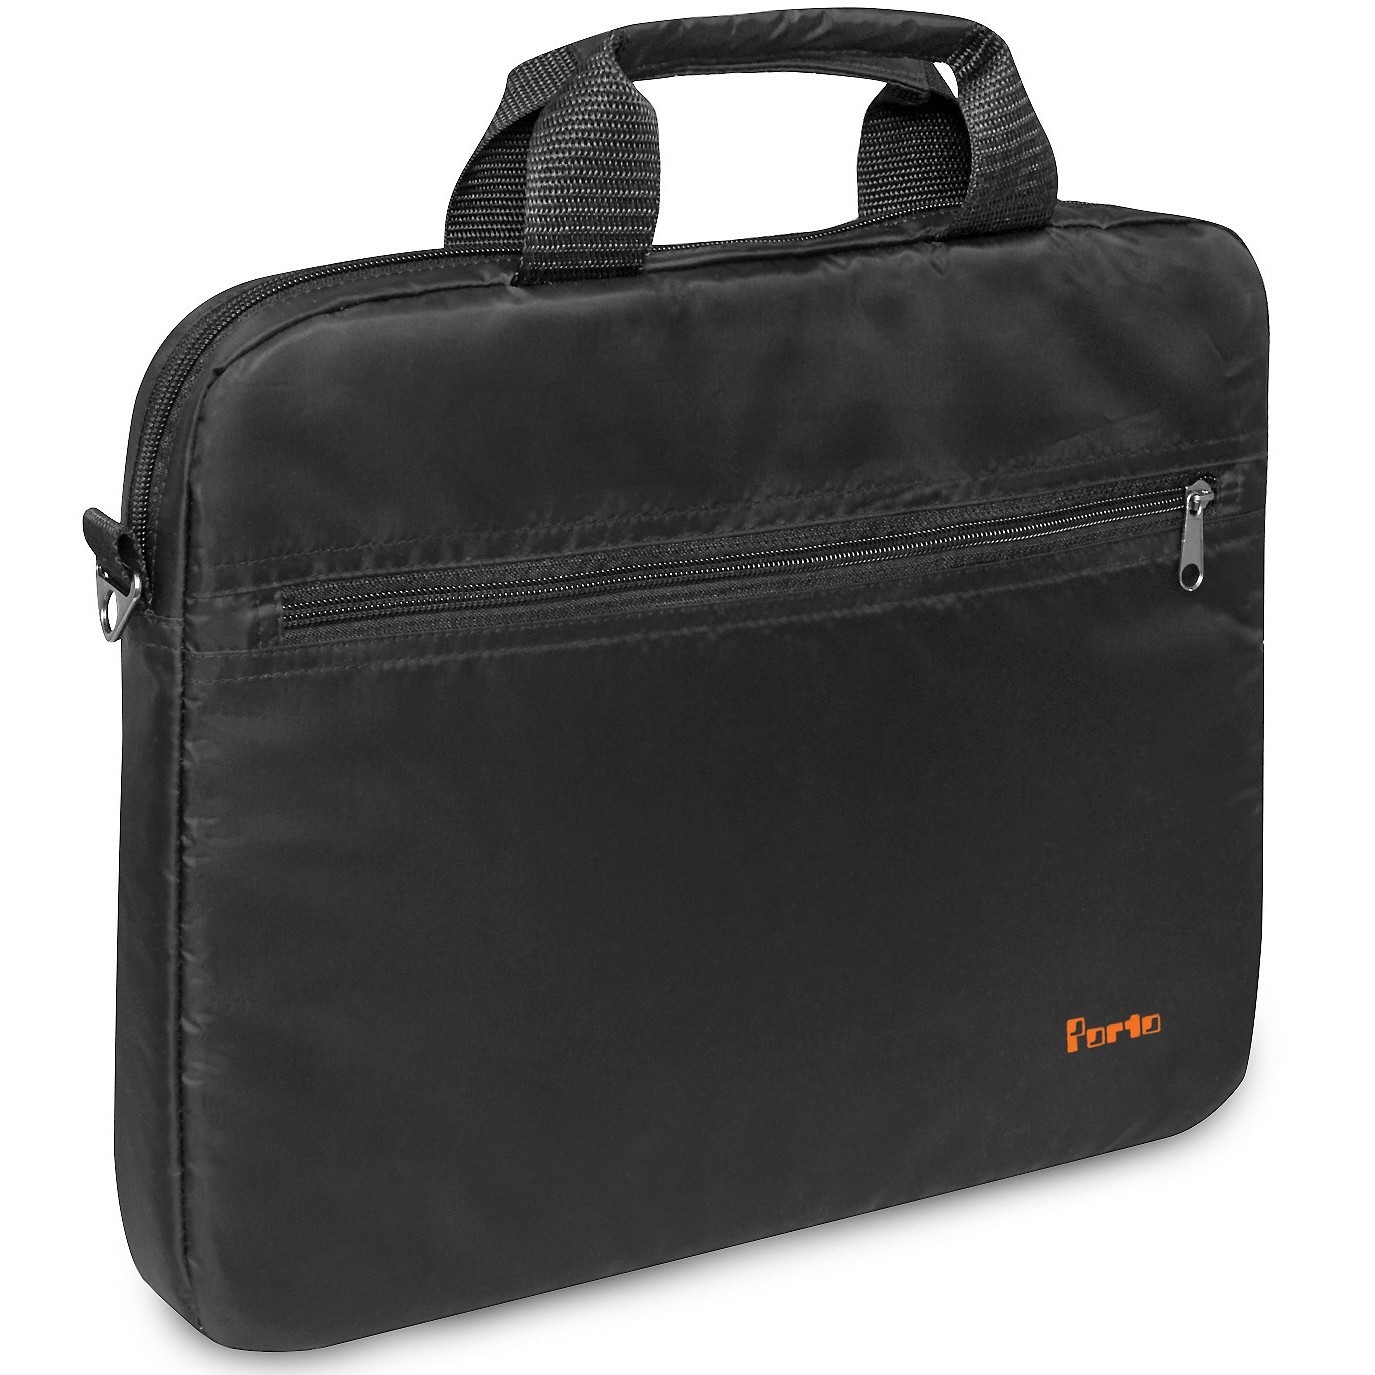 Defender 15.6. Ноутбук сумка Lenovo t210 Black. Pon-113bk. Сумка для ноутбука Porto.